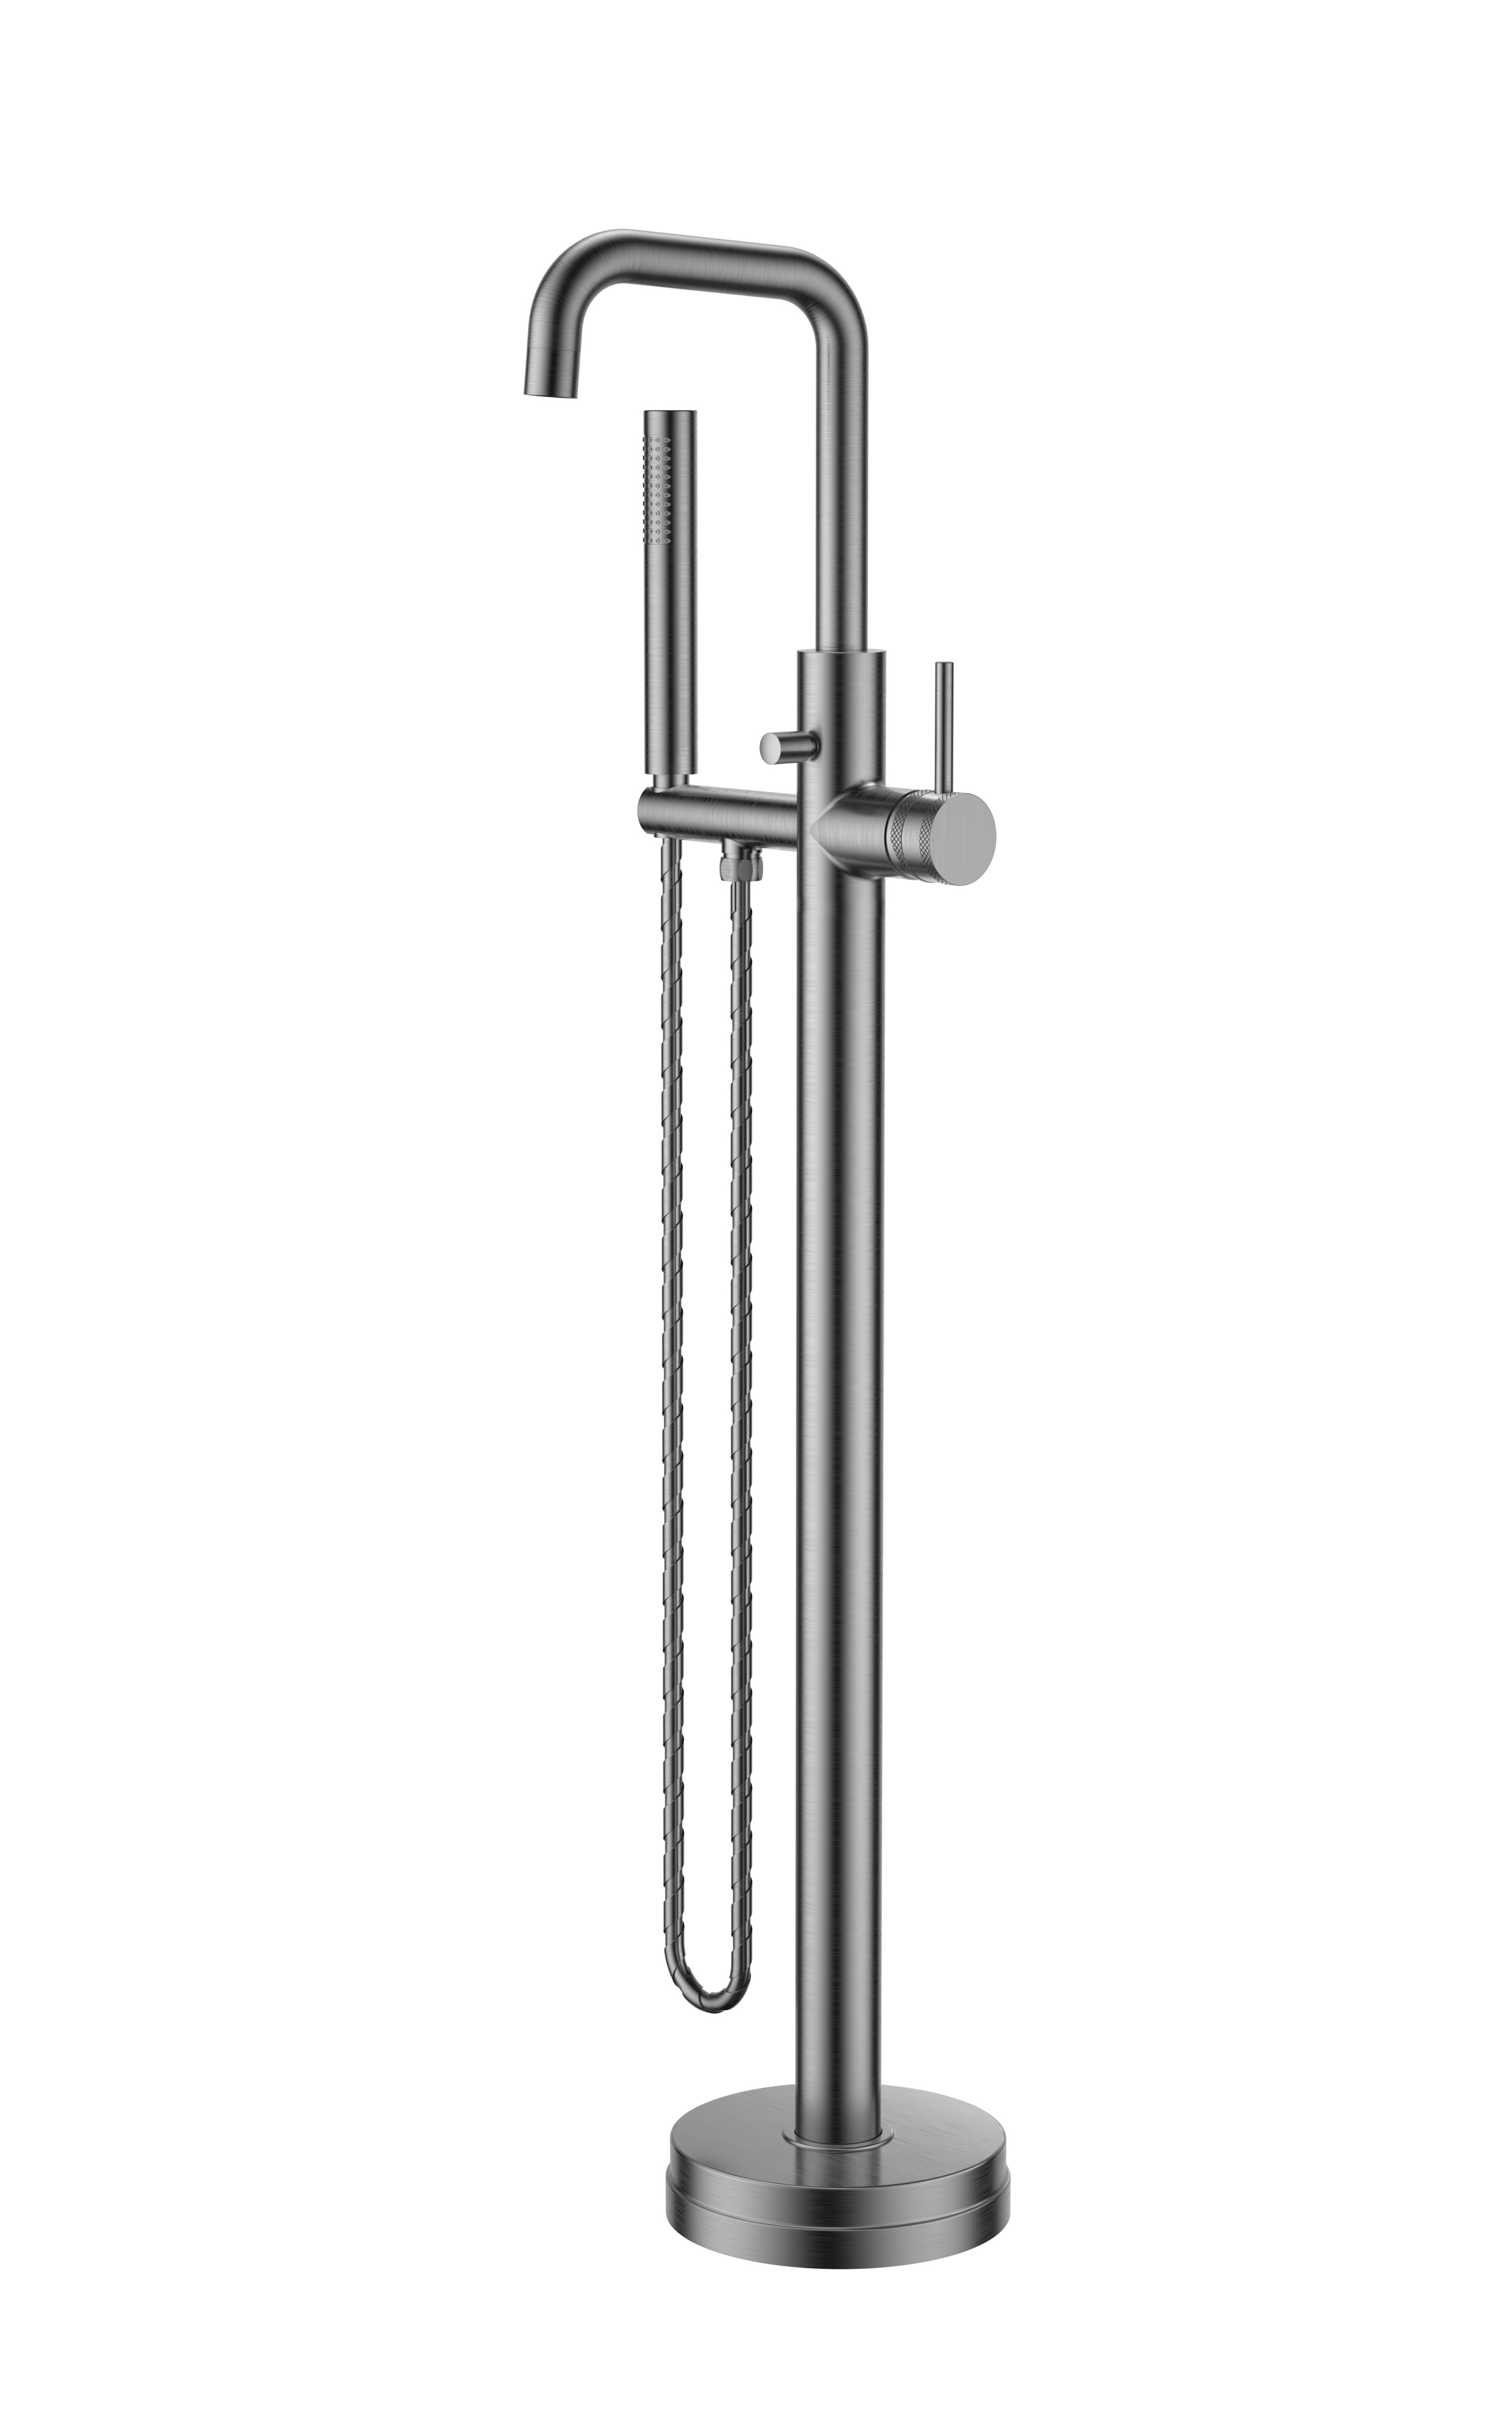 Eliseo Ricci Exclusiv Freestanding Bath Shower Mixer - Gunmetal (19503)